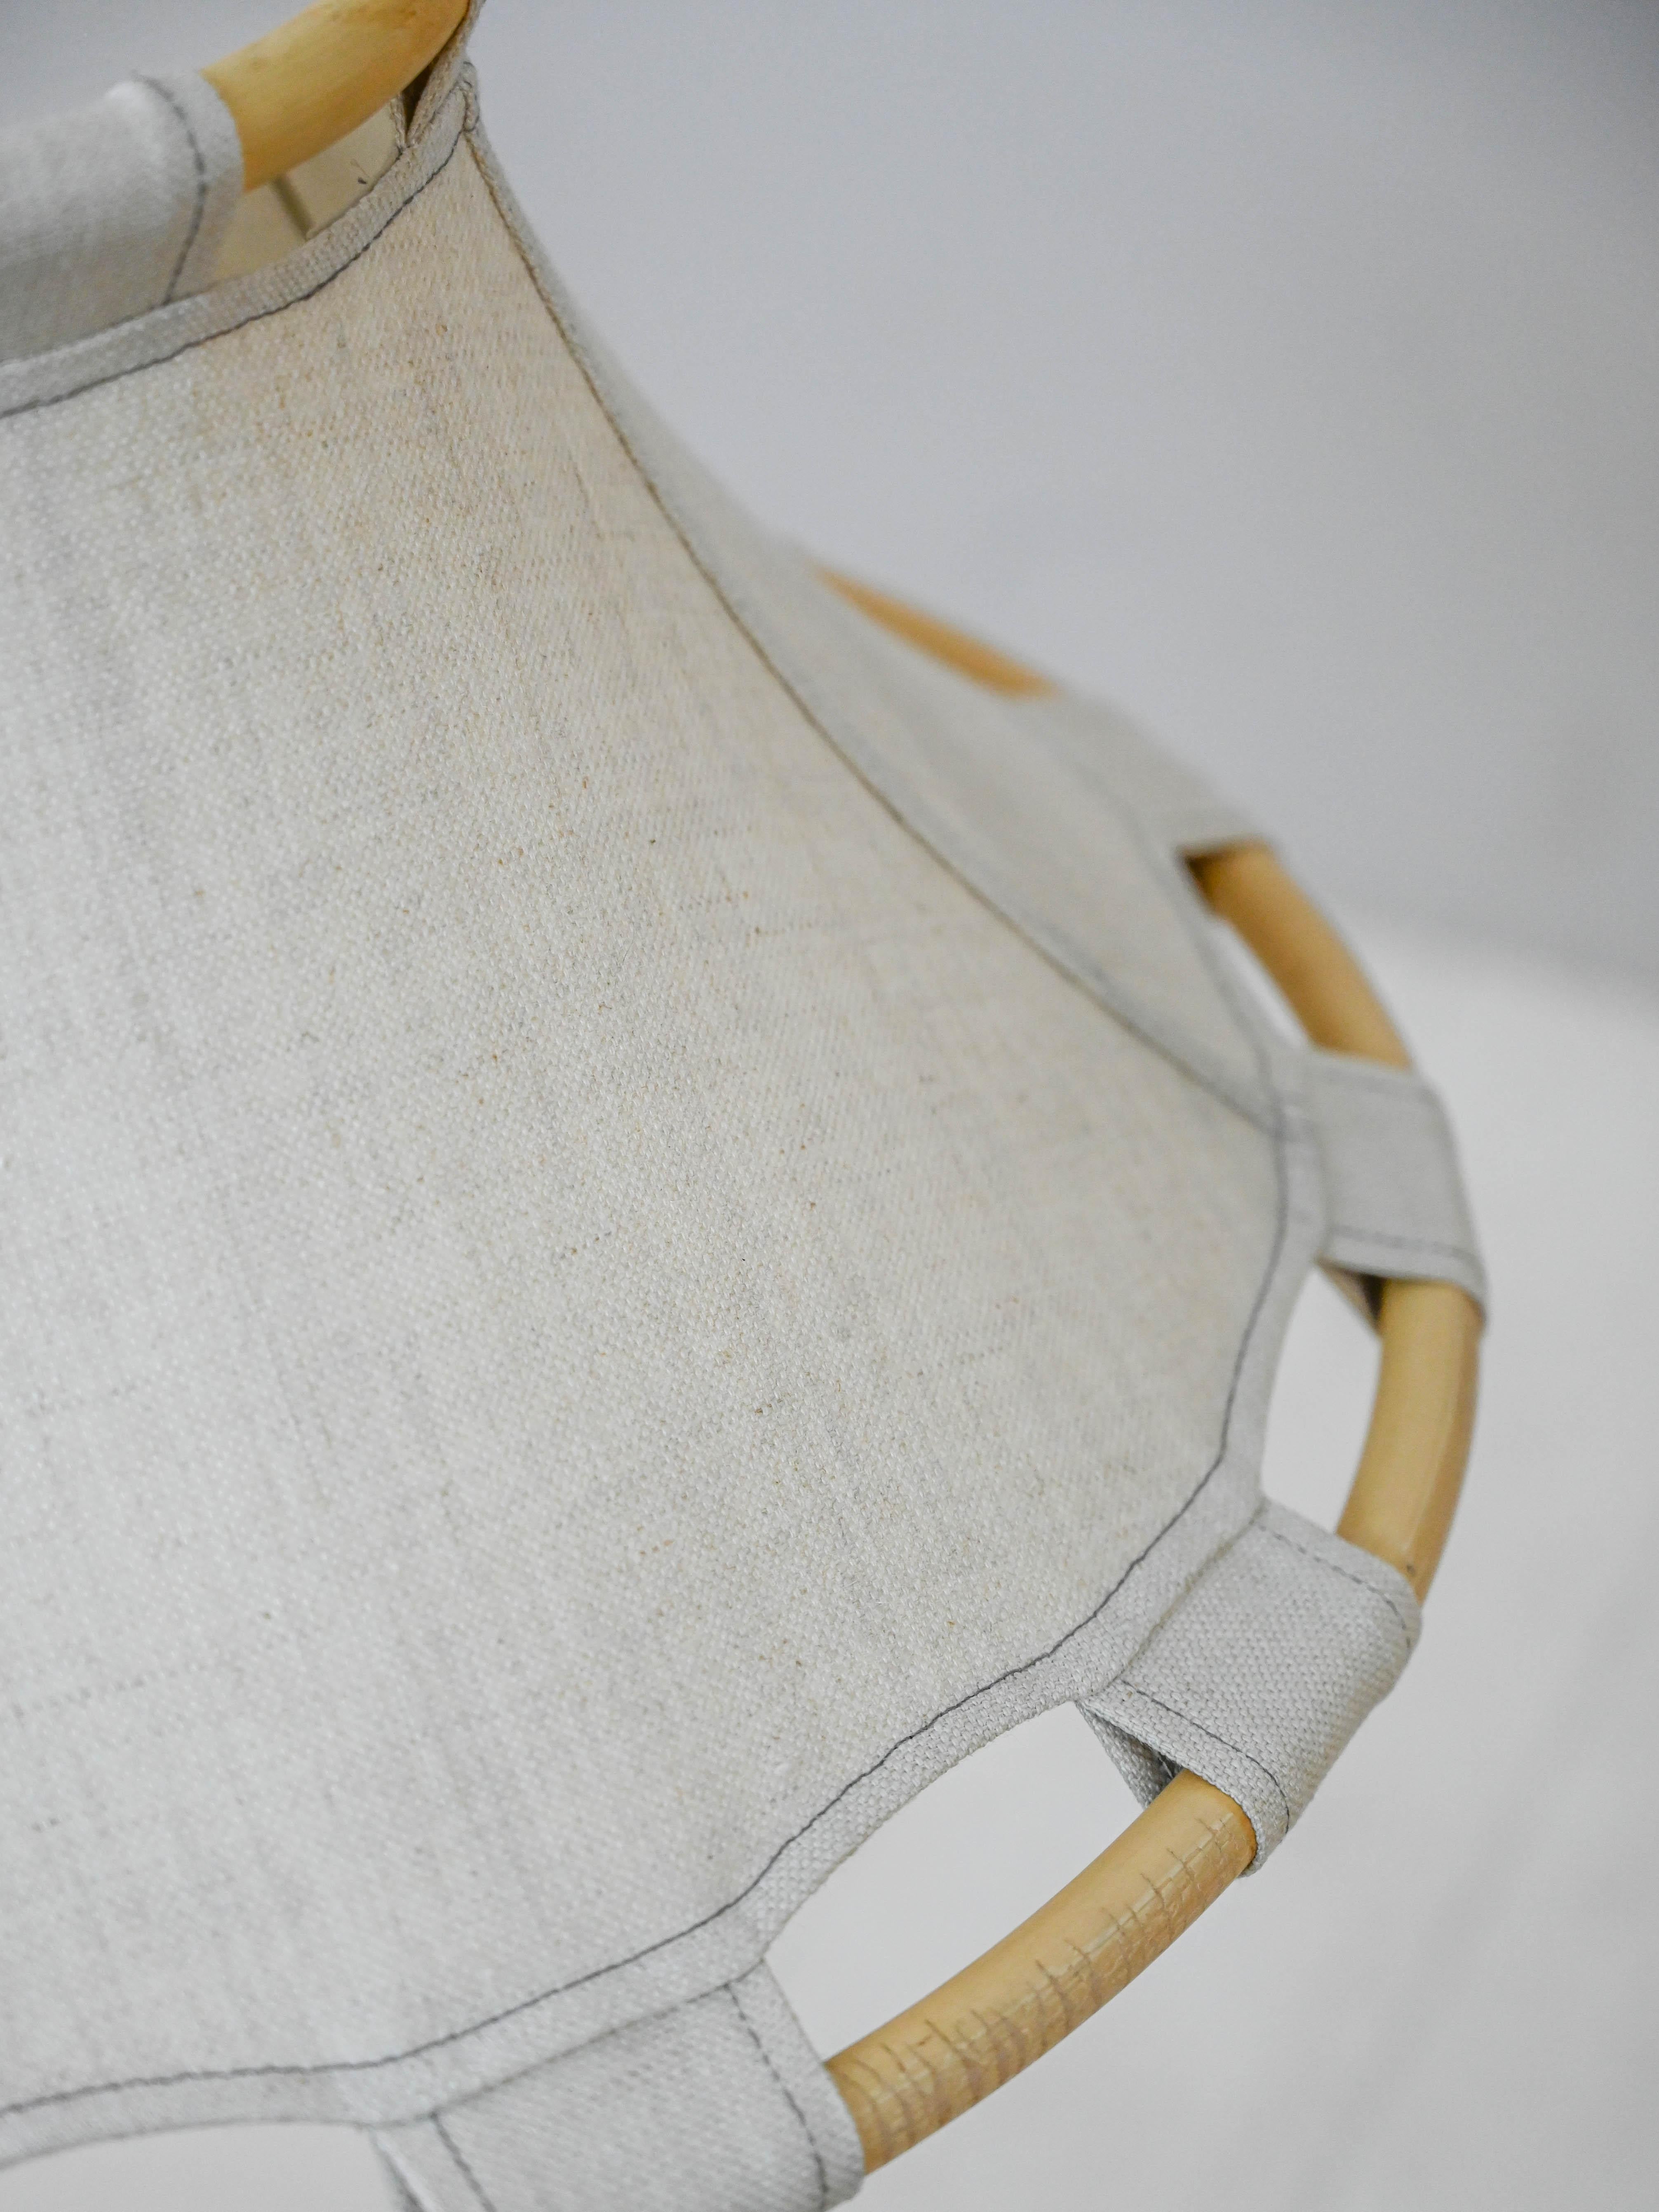 Fabric Anna Ahrens Pendant Lamp For Sale